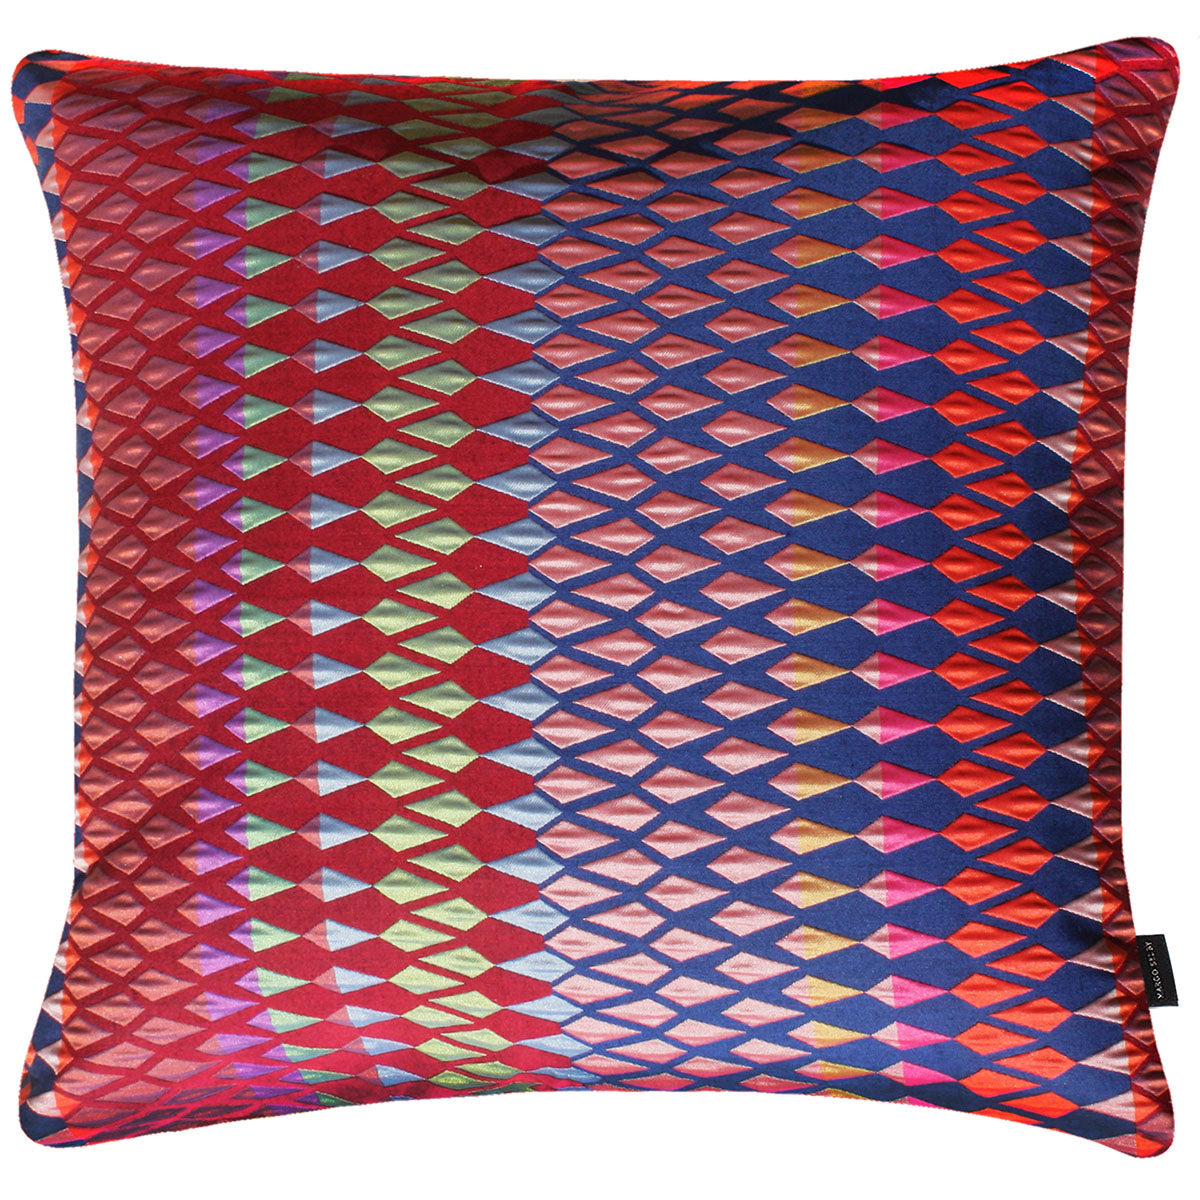 Designer cushion, Decorative cushion, Geometric cushion, Colourful cushion, Luxury cushion, Seat cushion,  couch cushion covers, Cushion cover,red cushion,